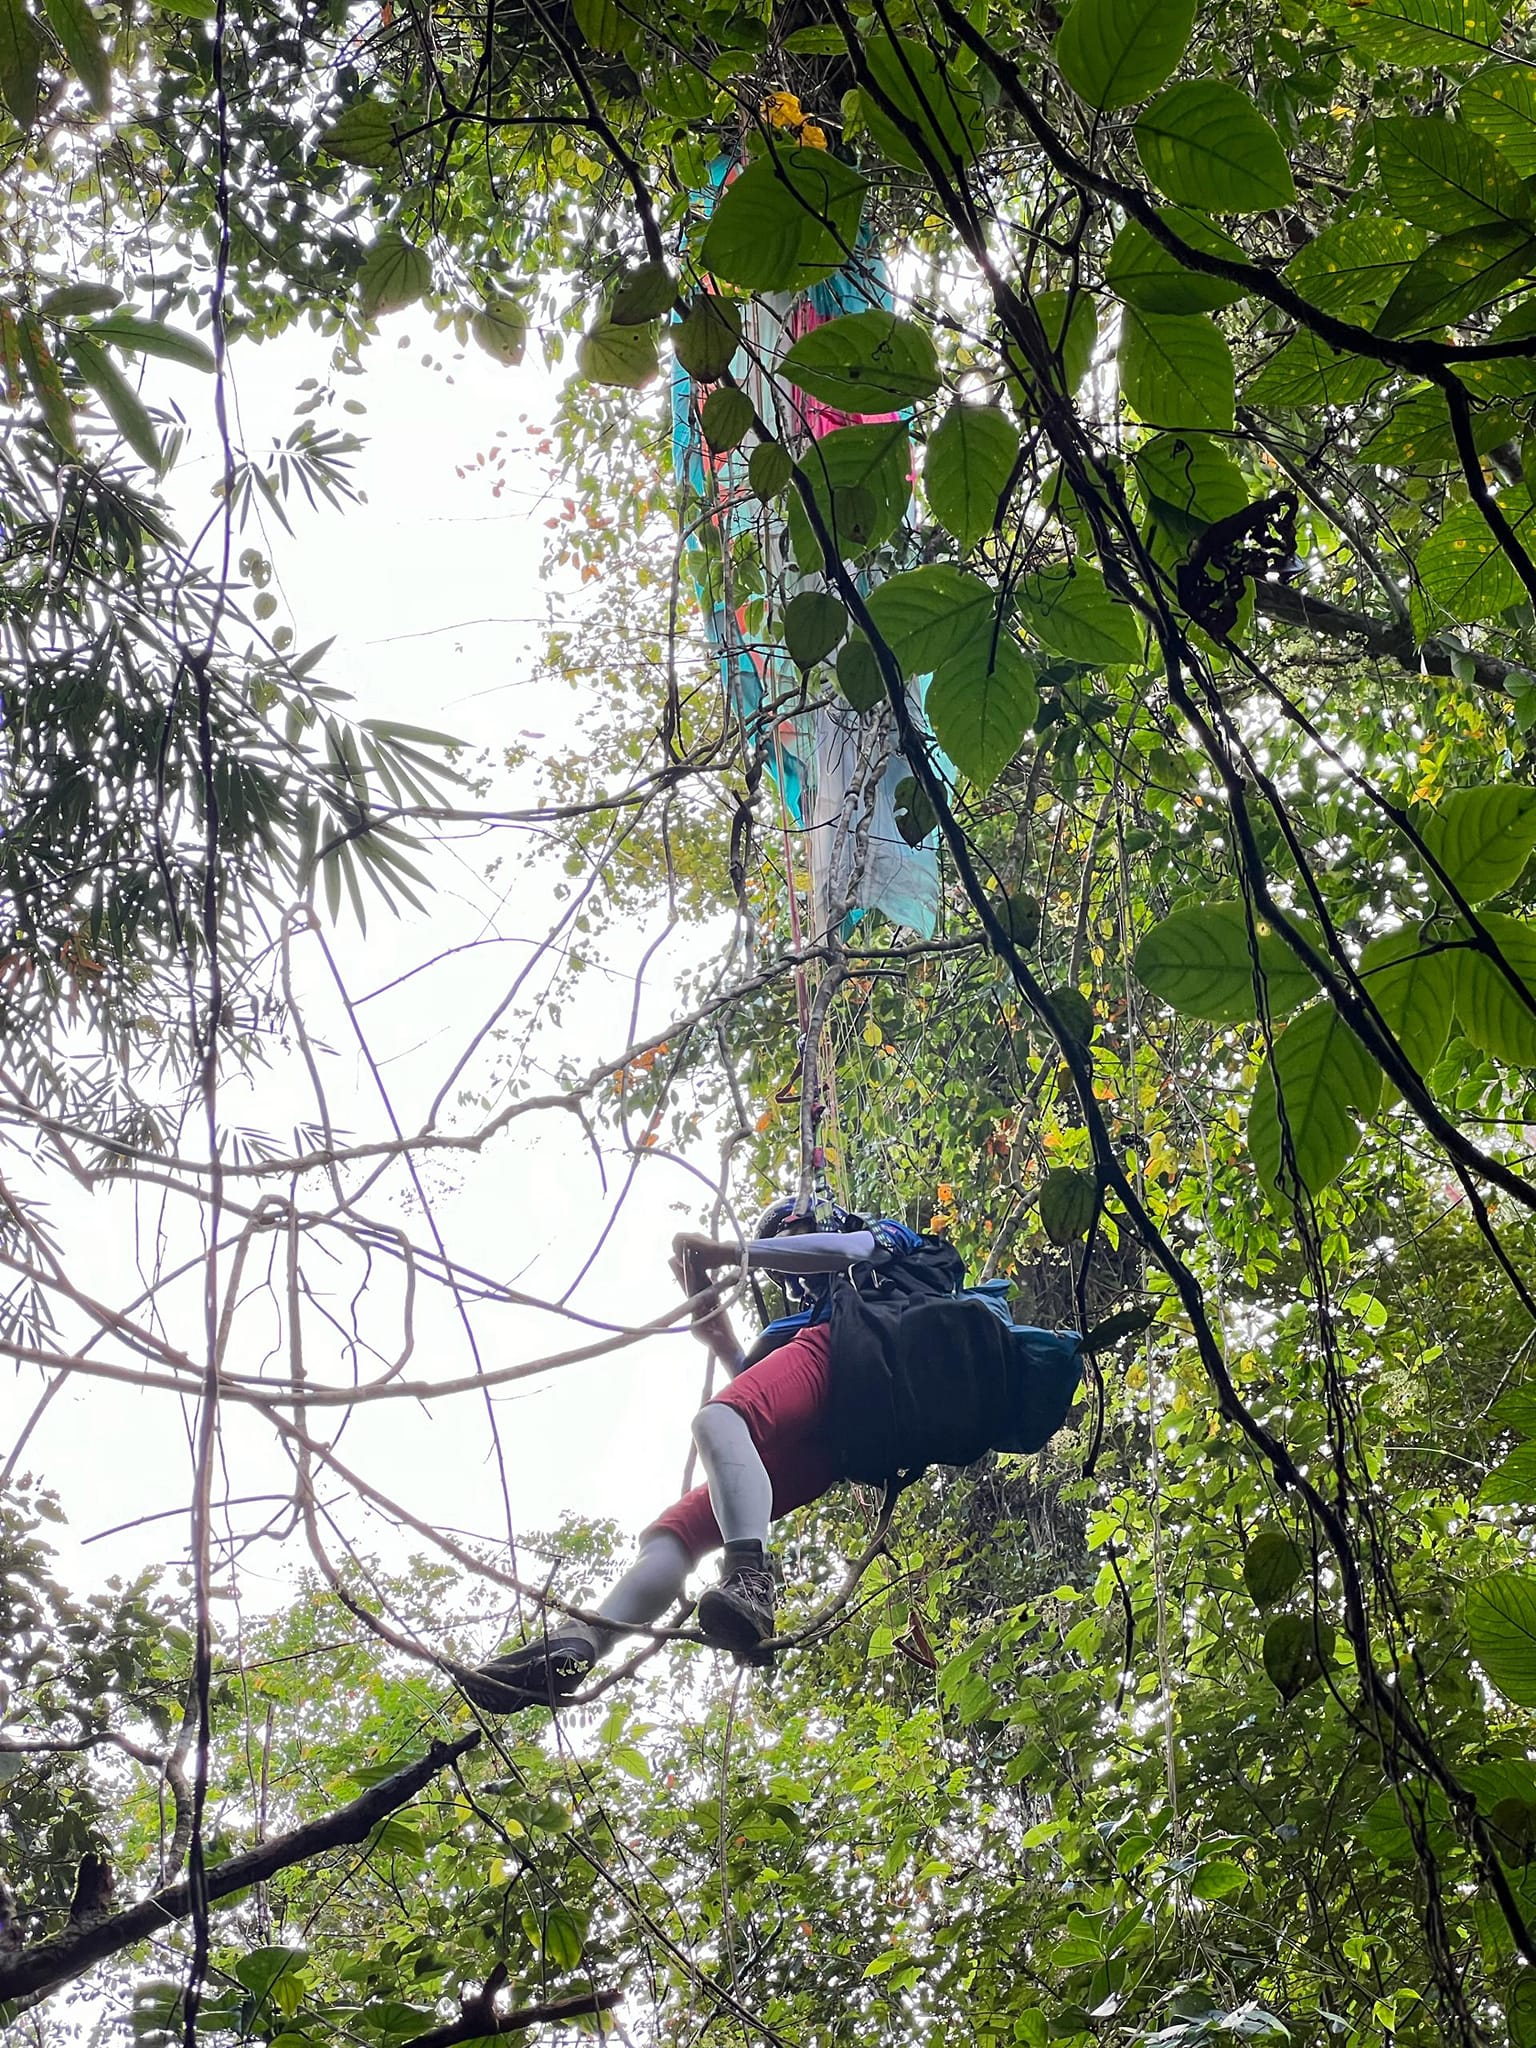 Korean man cha woo-sung stuck on 50m-tall tree in sabah